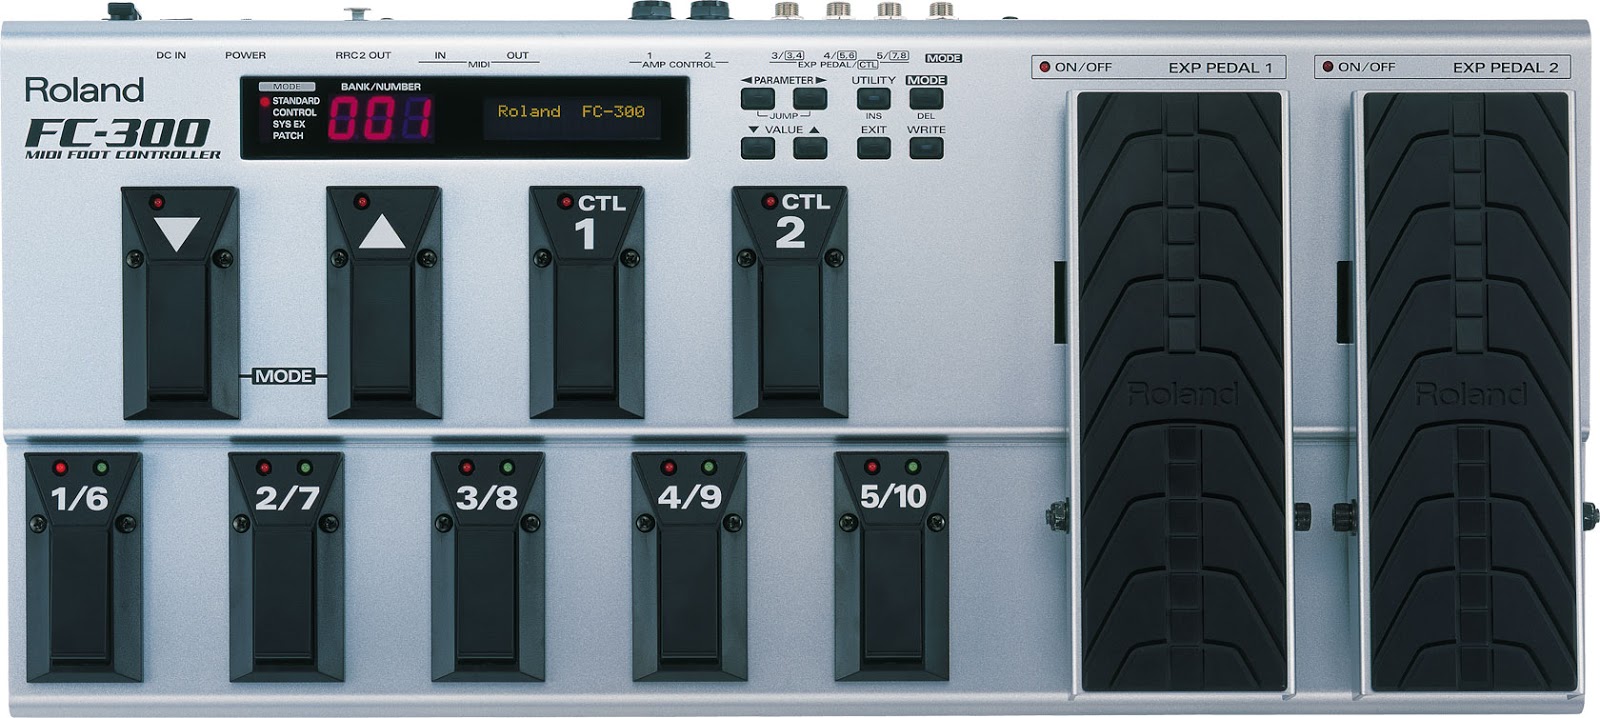 MIDI Calidad: FC-300 MIDI Foot Controller